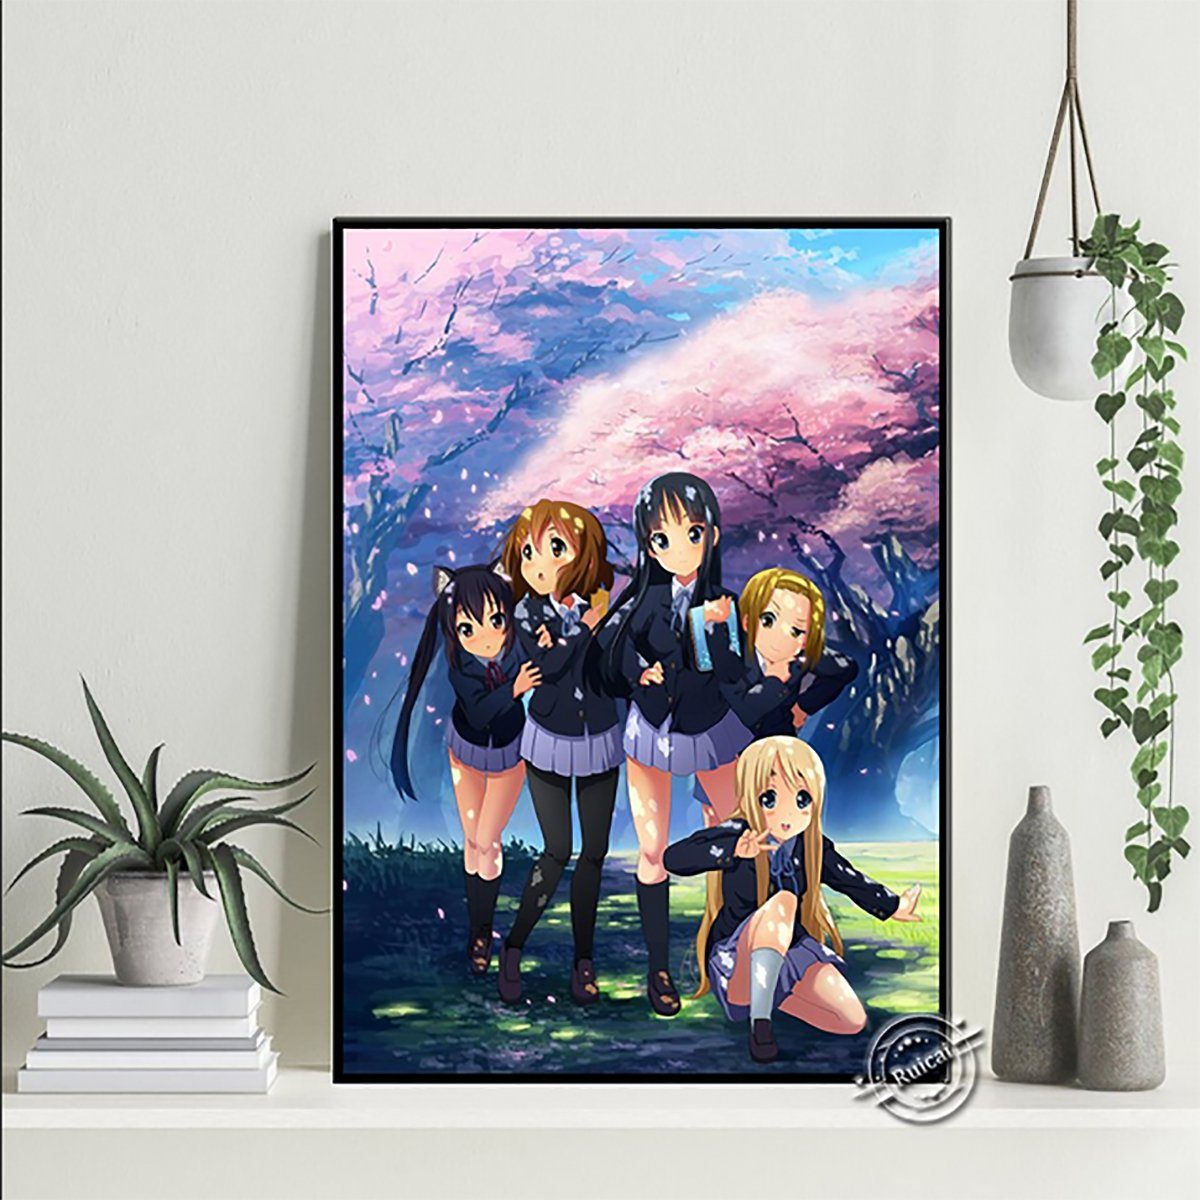 TPFLiving Kunstdruck (OHNE RAHMEN) Poster - Leinwand - Wandbild, K-ON - Kunstdruck aus der japanischen Anime Fernsehserie - (Yonkoma Manga - Leinwand Wohnzimmer, Leinwand Bilder, Kunstdruck), Leinwand bunt - Größe 60x80cm